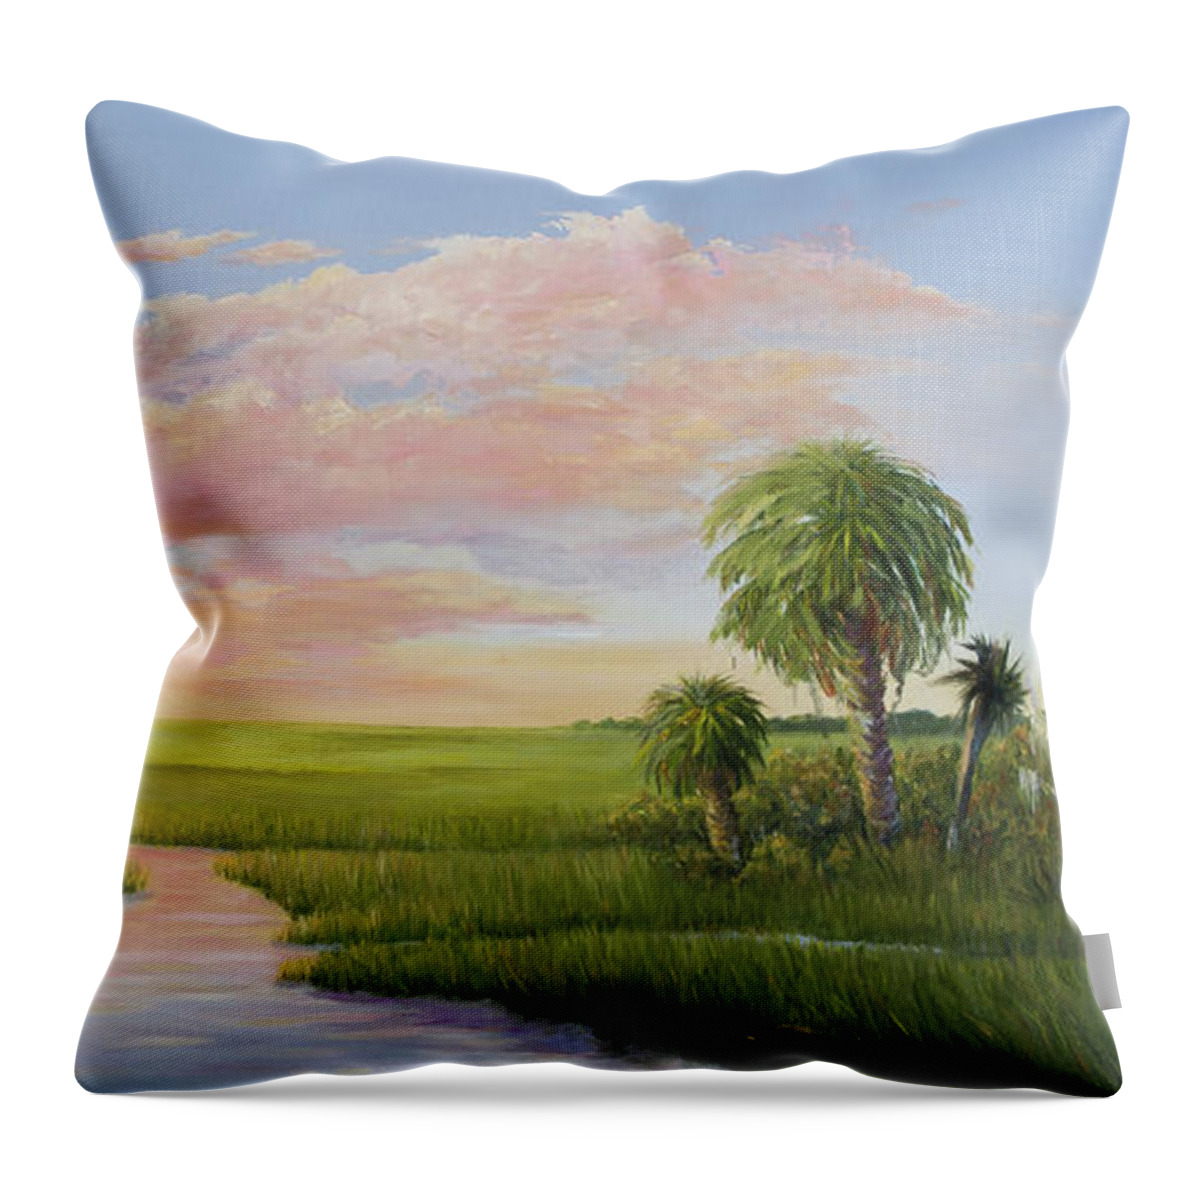 Coastal Sunset Throw Pillow featuring the painting Carolina Classic by Audrey McLeod